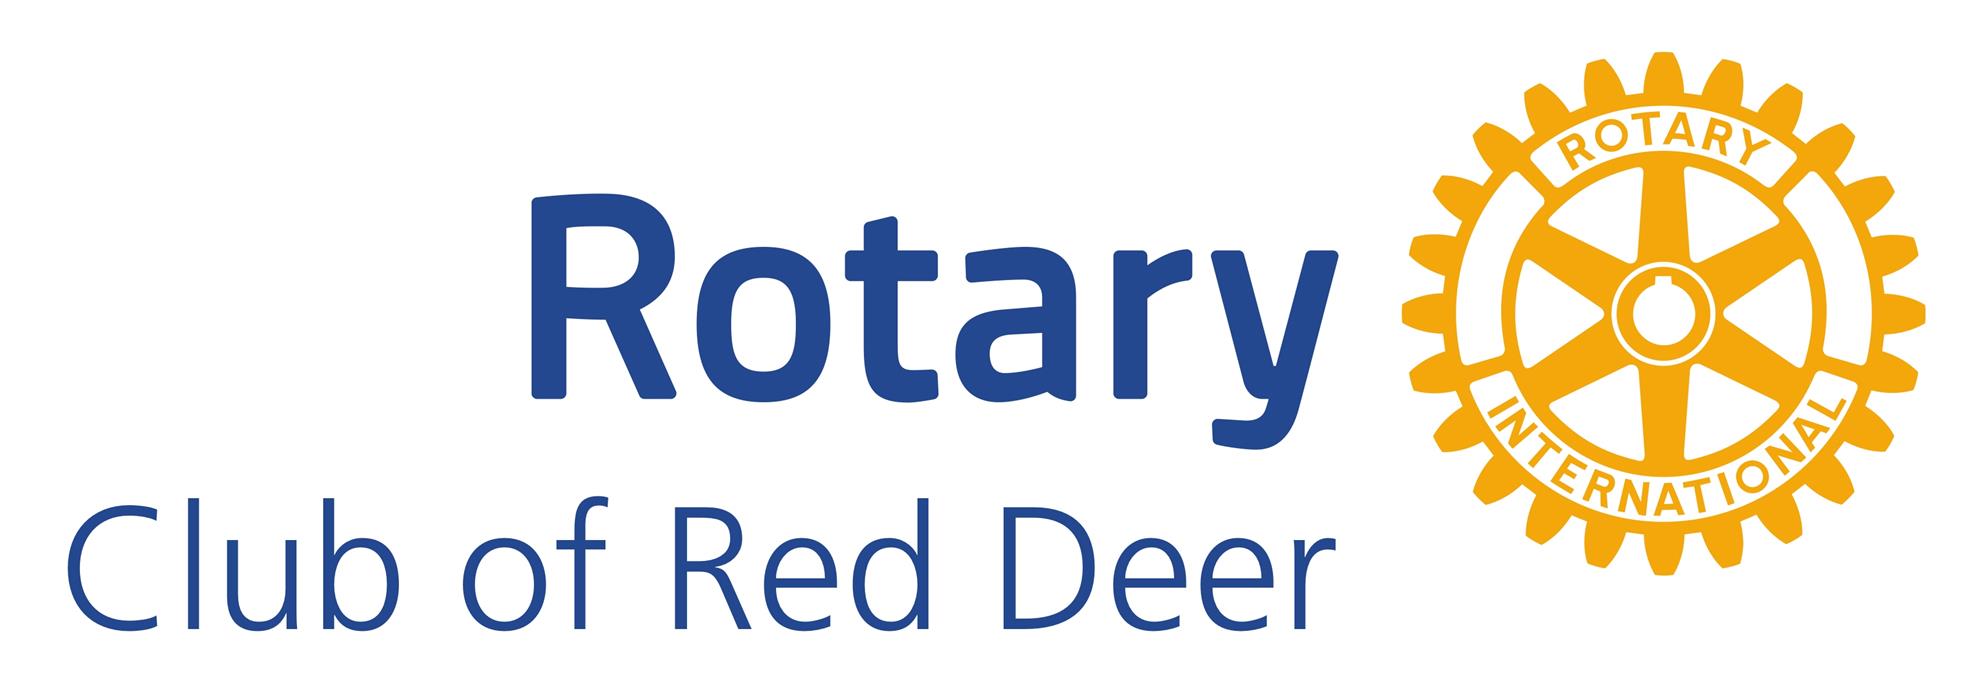 Red Deer logo